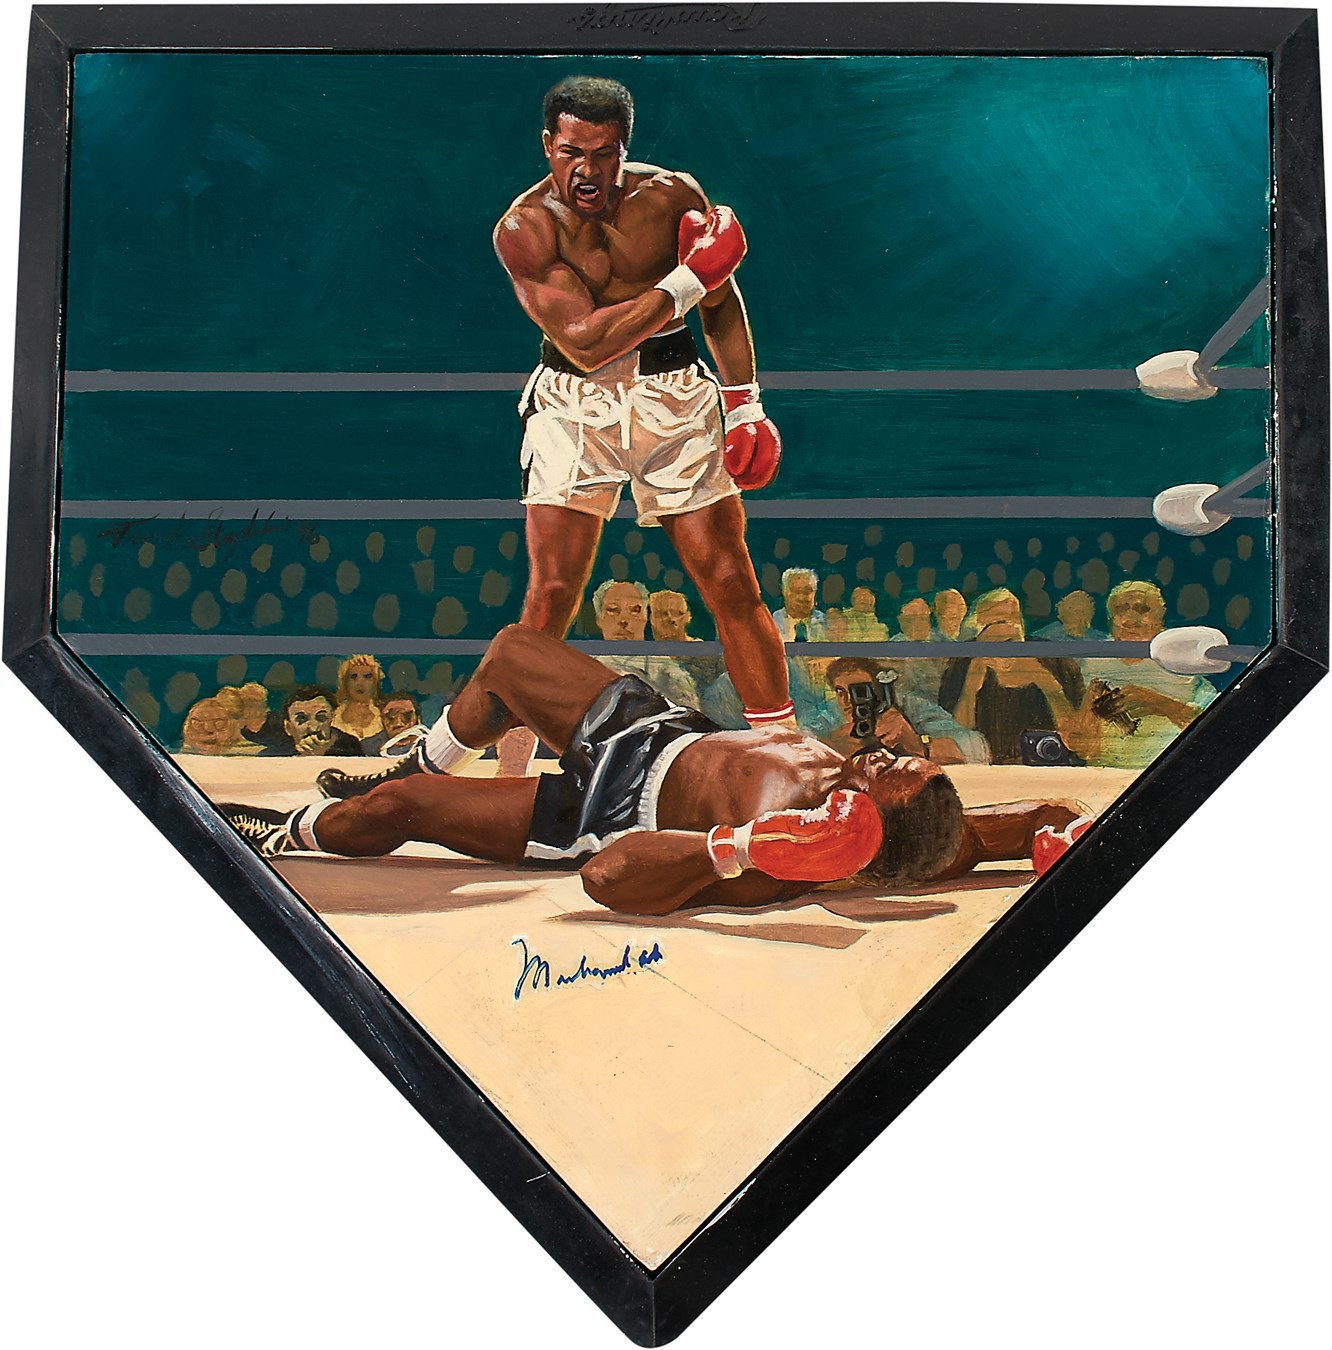 Muhammad Ali & Boxing - Classic Ali vs. Liston Oil Painting on Home Plate Signed by Muhammad Ali (JSA LOA)